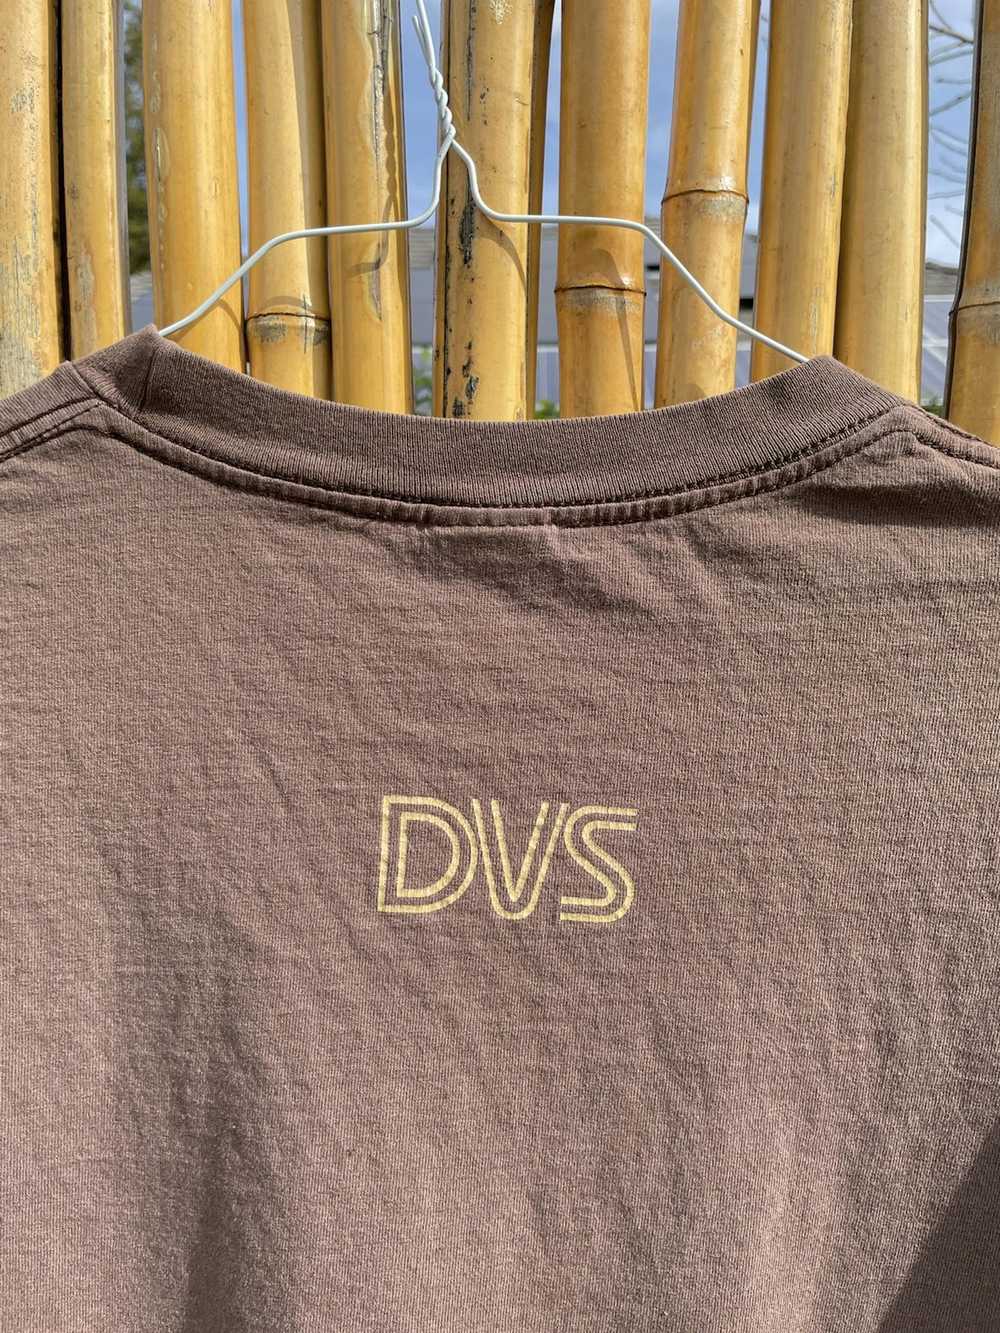 Dvs × Streetwear × Vintage Dvs skateboard shirt - image 3